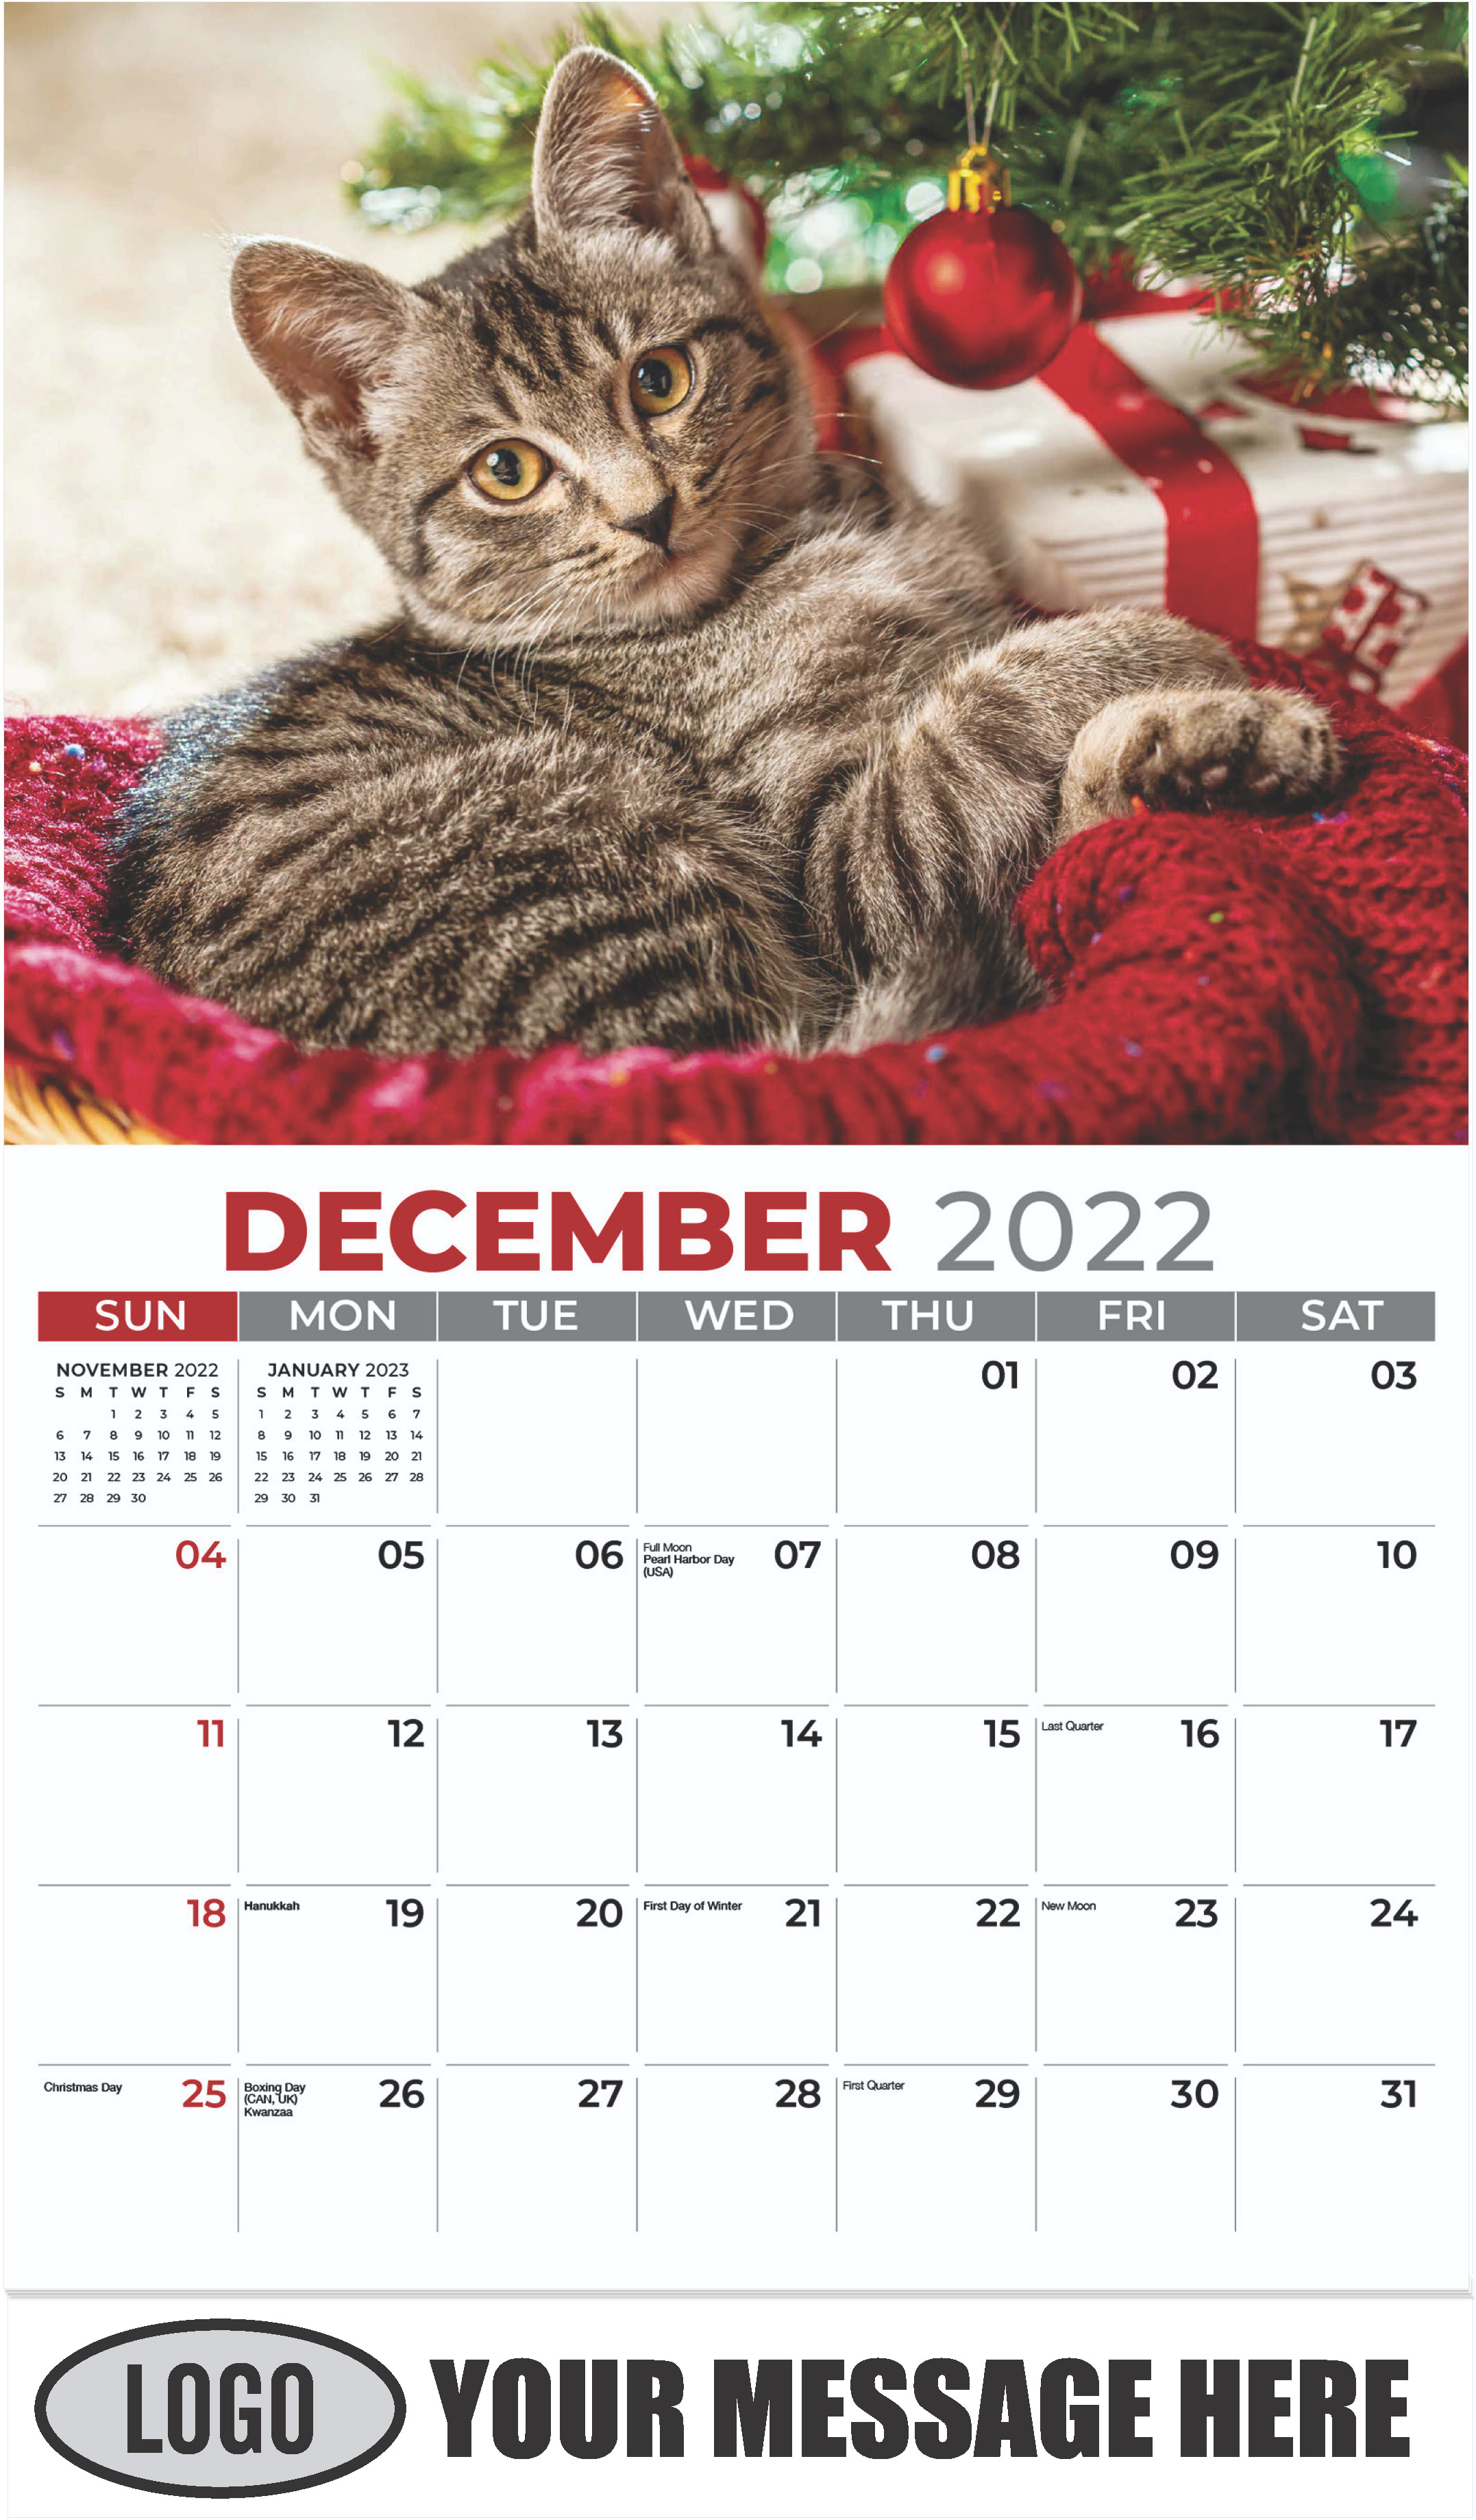 Tabby under Christmas Tree - December 2022 - Kittens 2023 Promotional Calendar